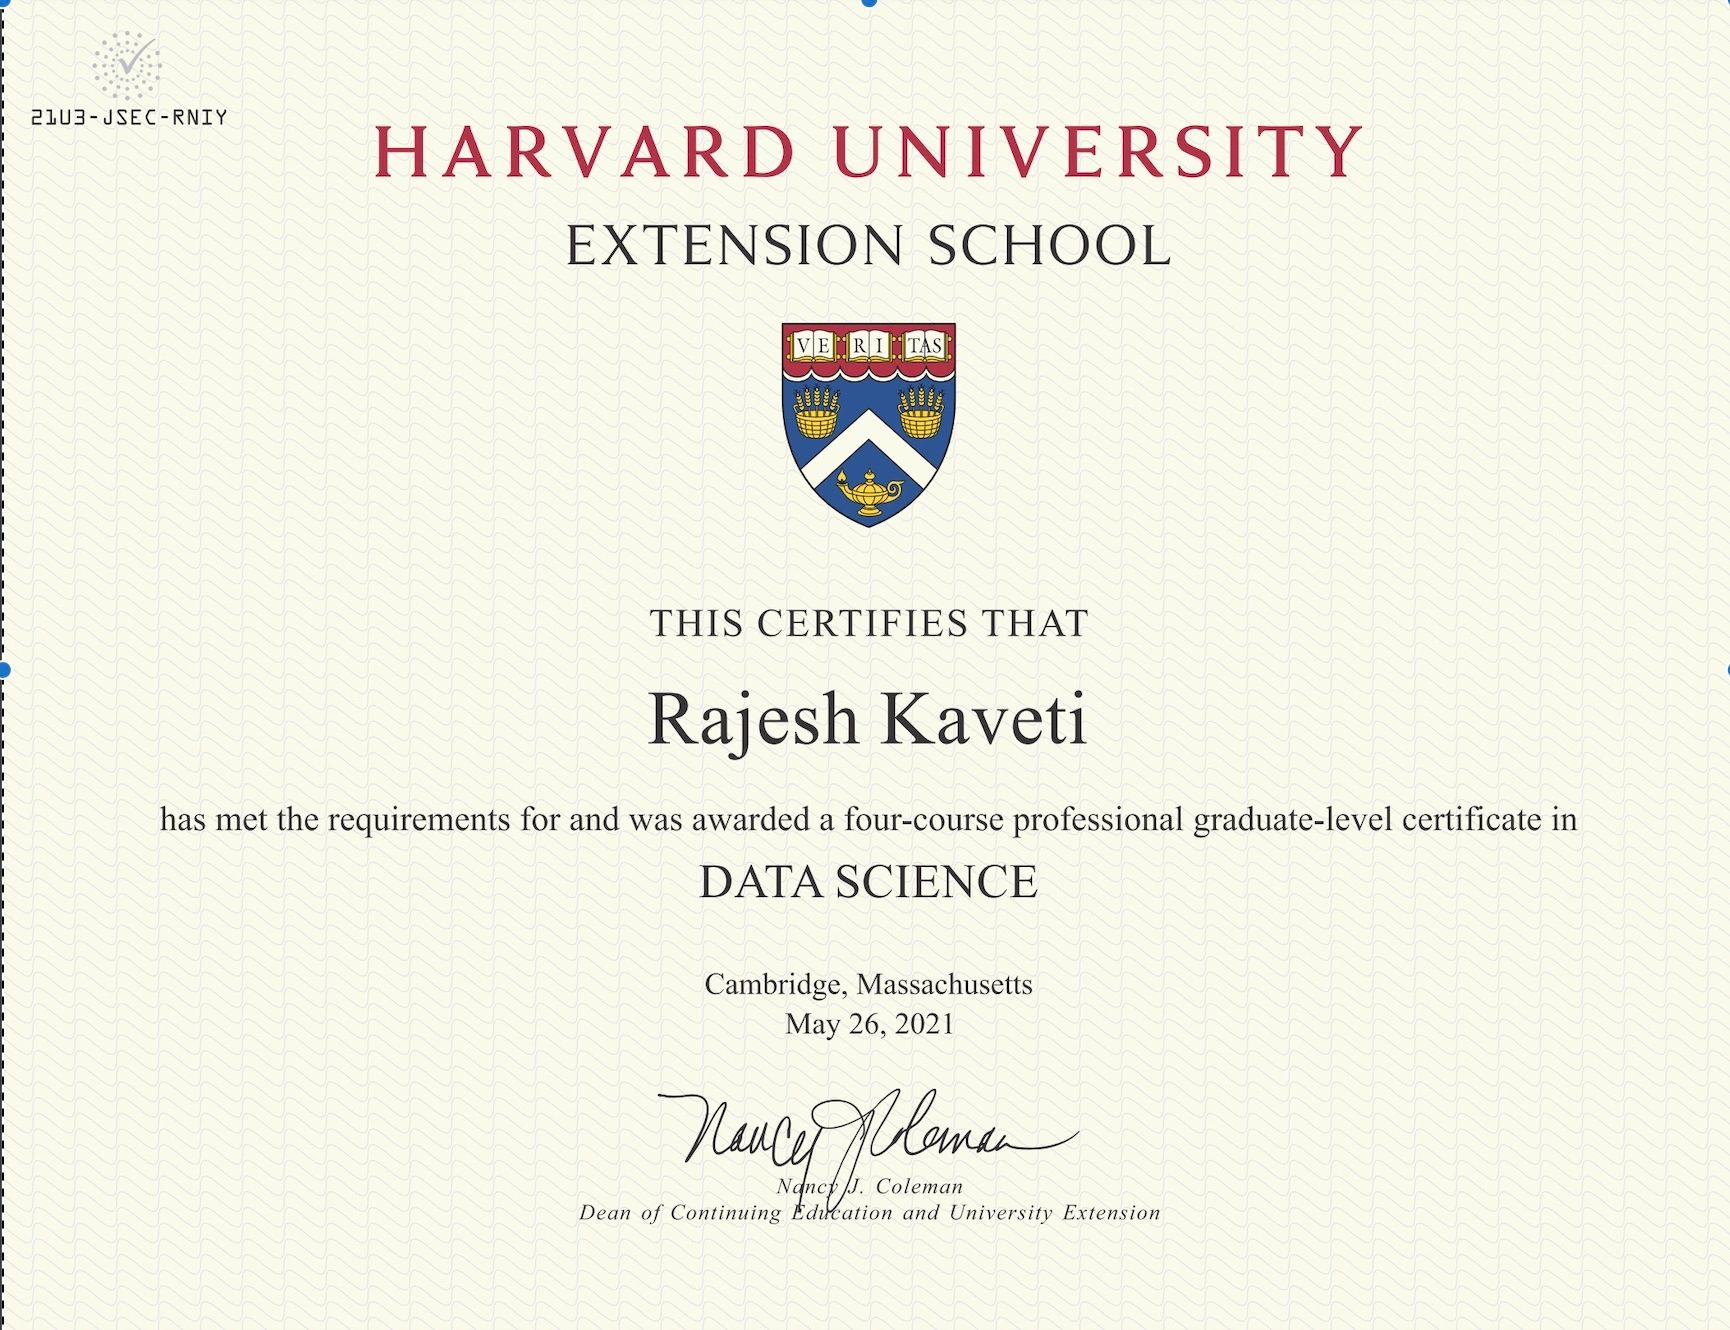 Data Science at Harvard Extension